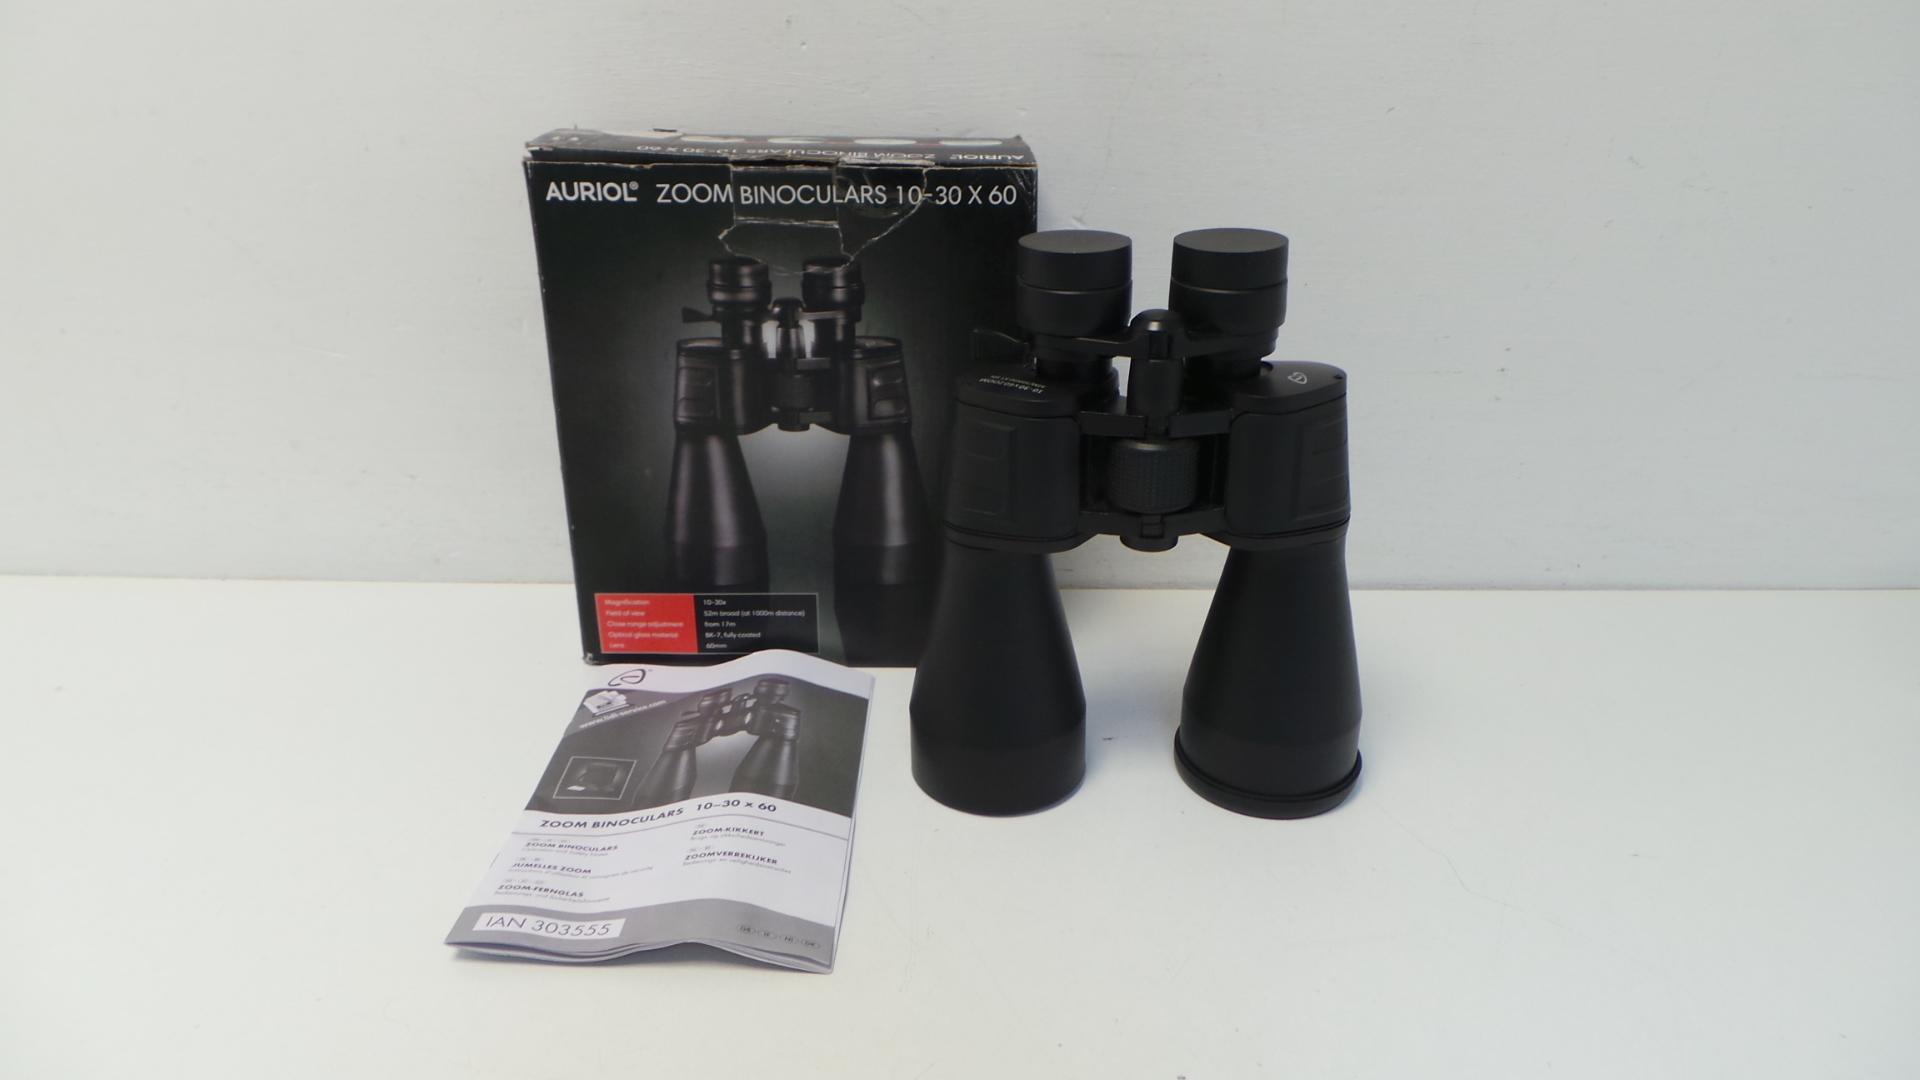 60 x Zoom 10-30 Auriol Binoculars